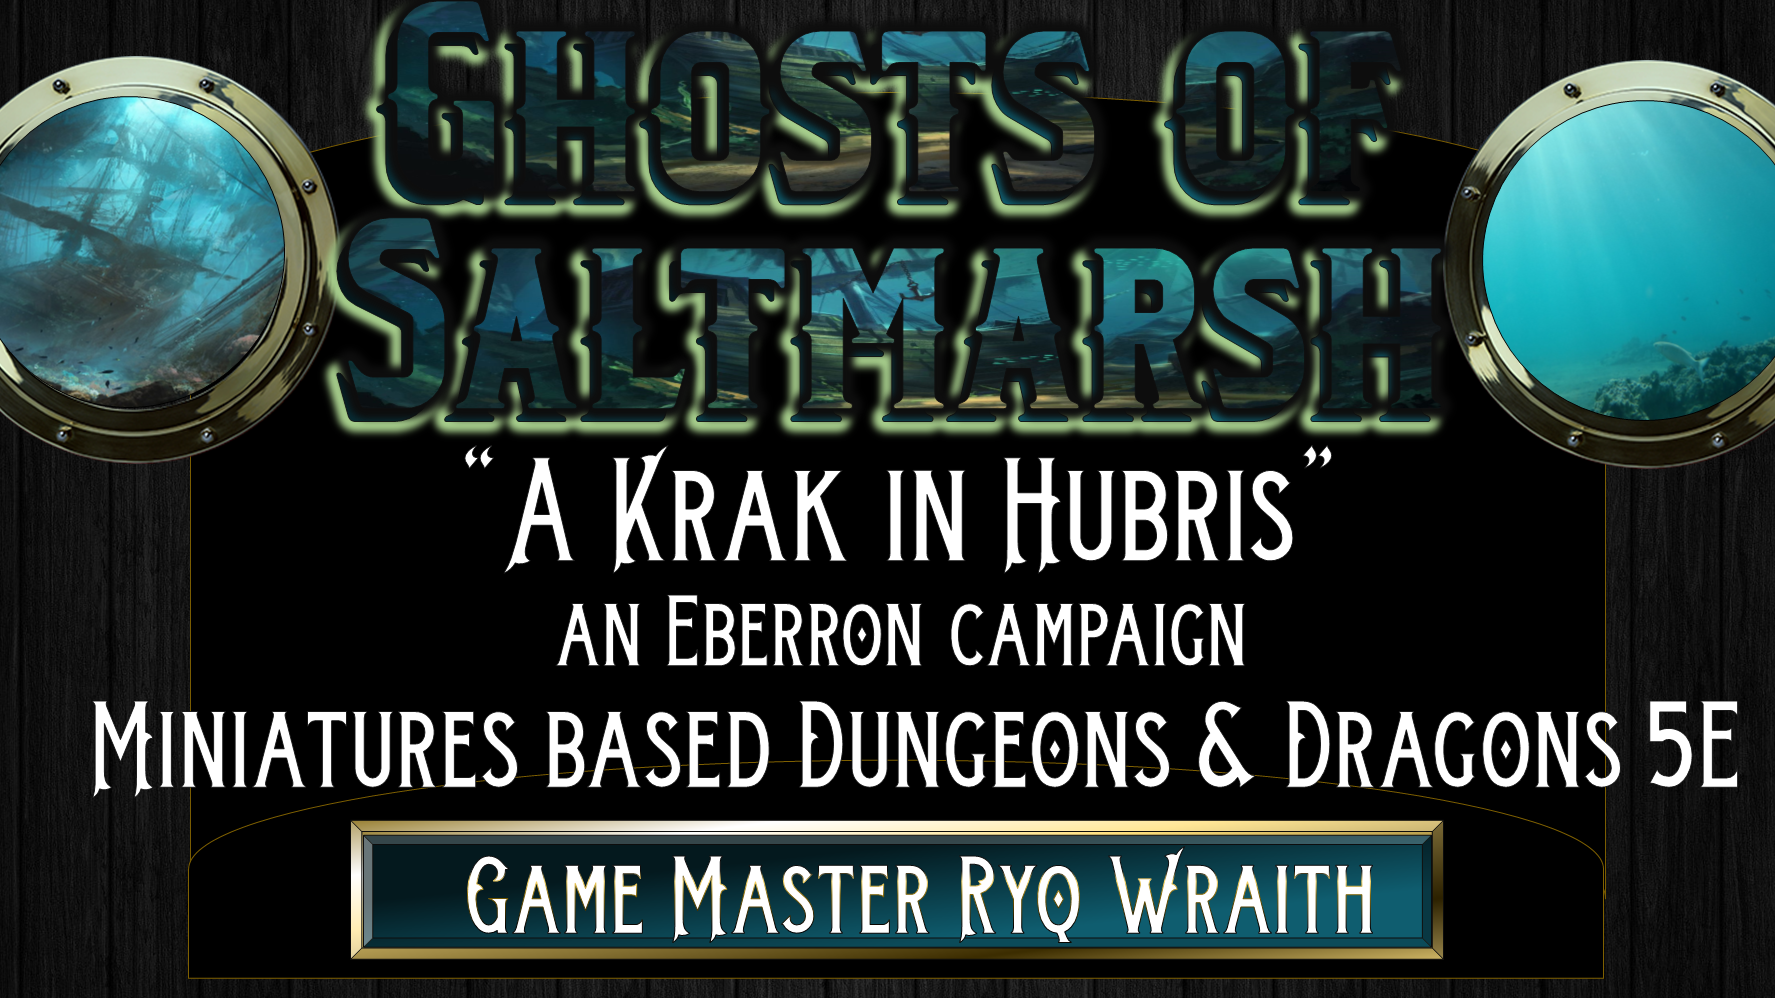 Ghosts of Saltmarsh - "A Krak in Hubris" (set in Eberron)